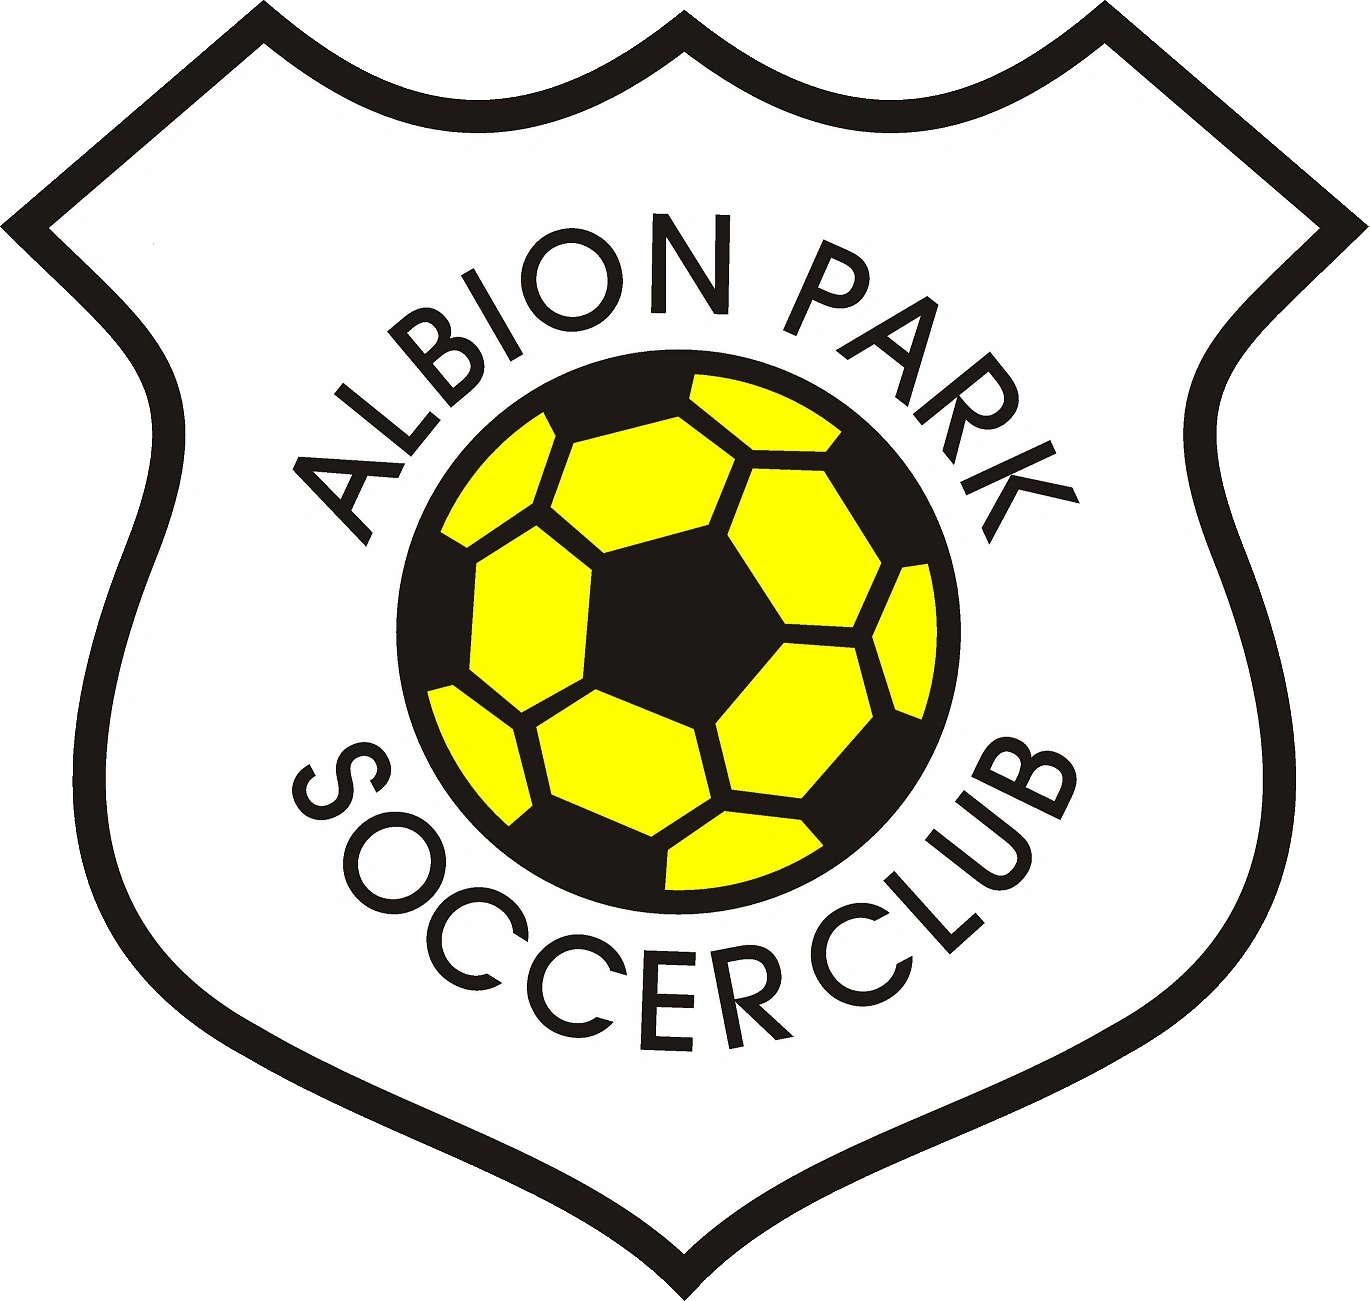 Albion Park Soccer Club - Home